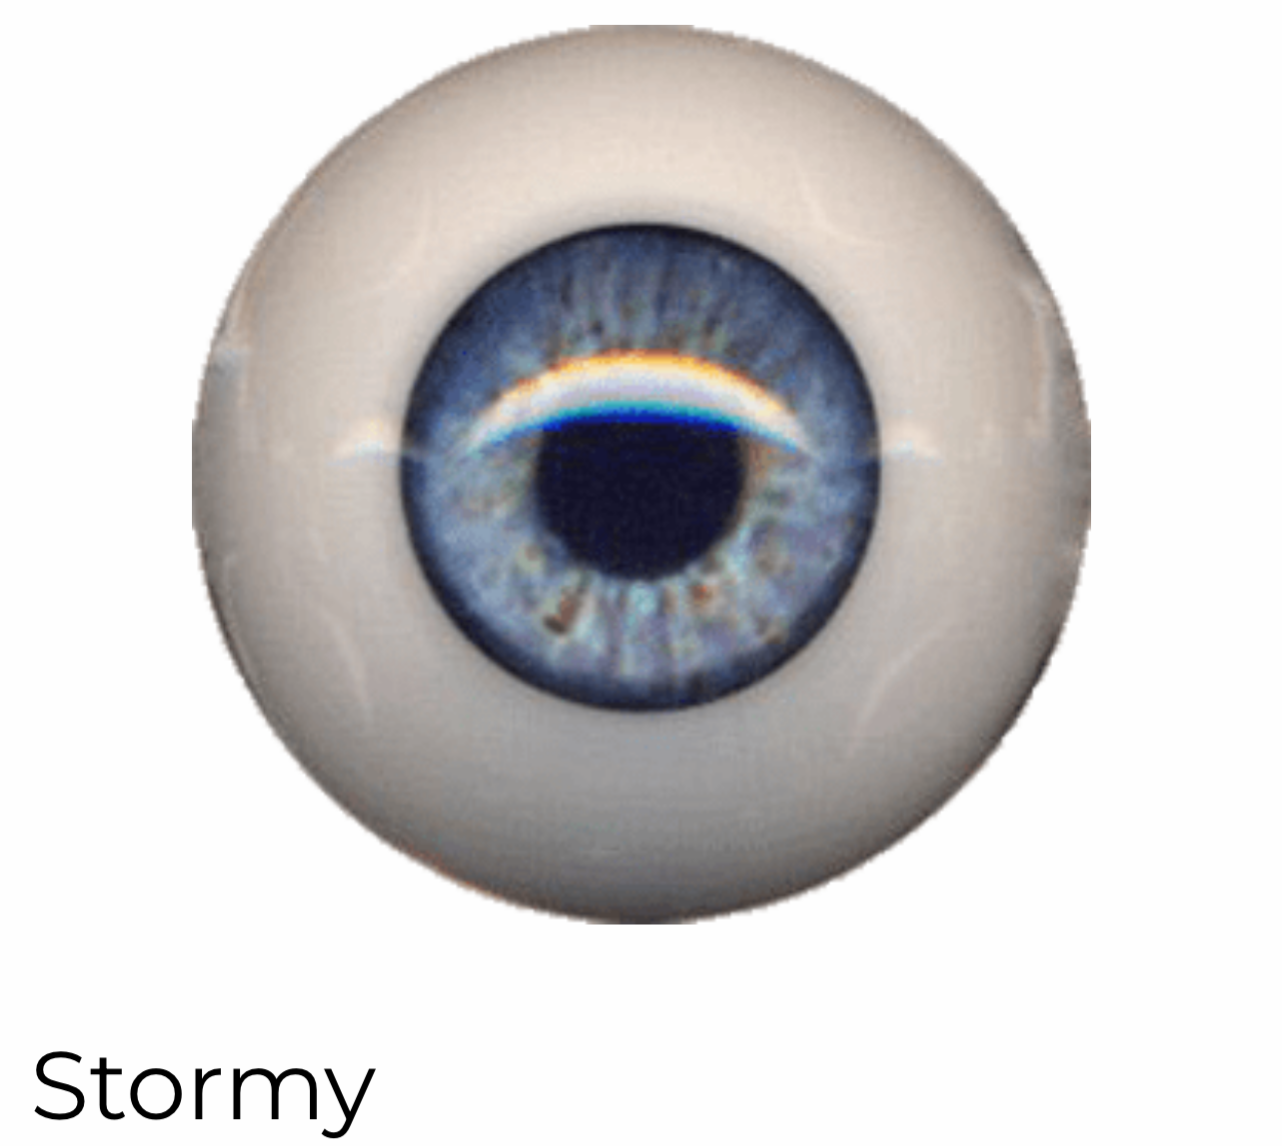 EyeCo PolyGlass Eyes - Stormy - 18 mm